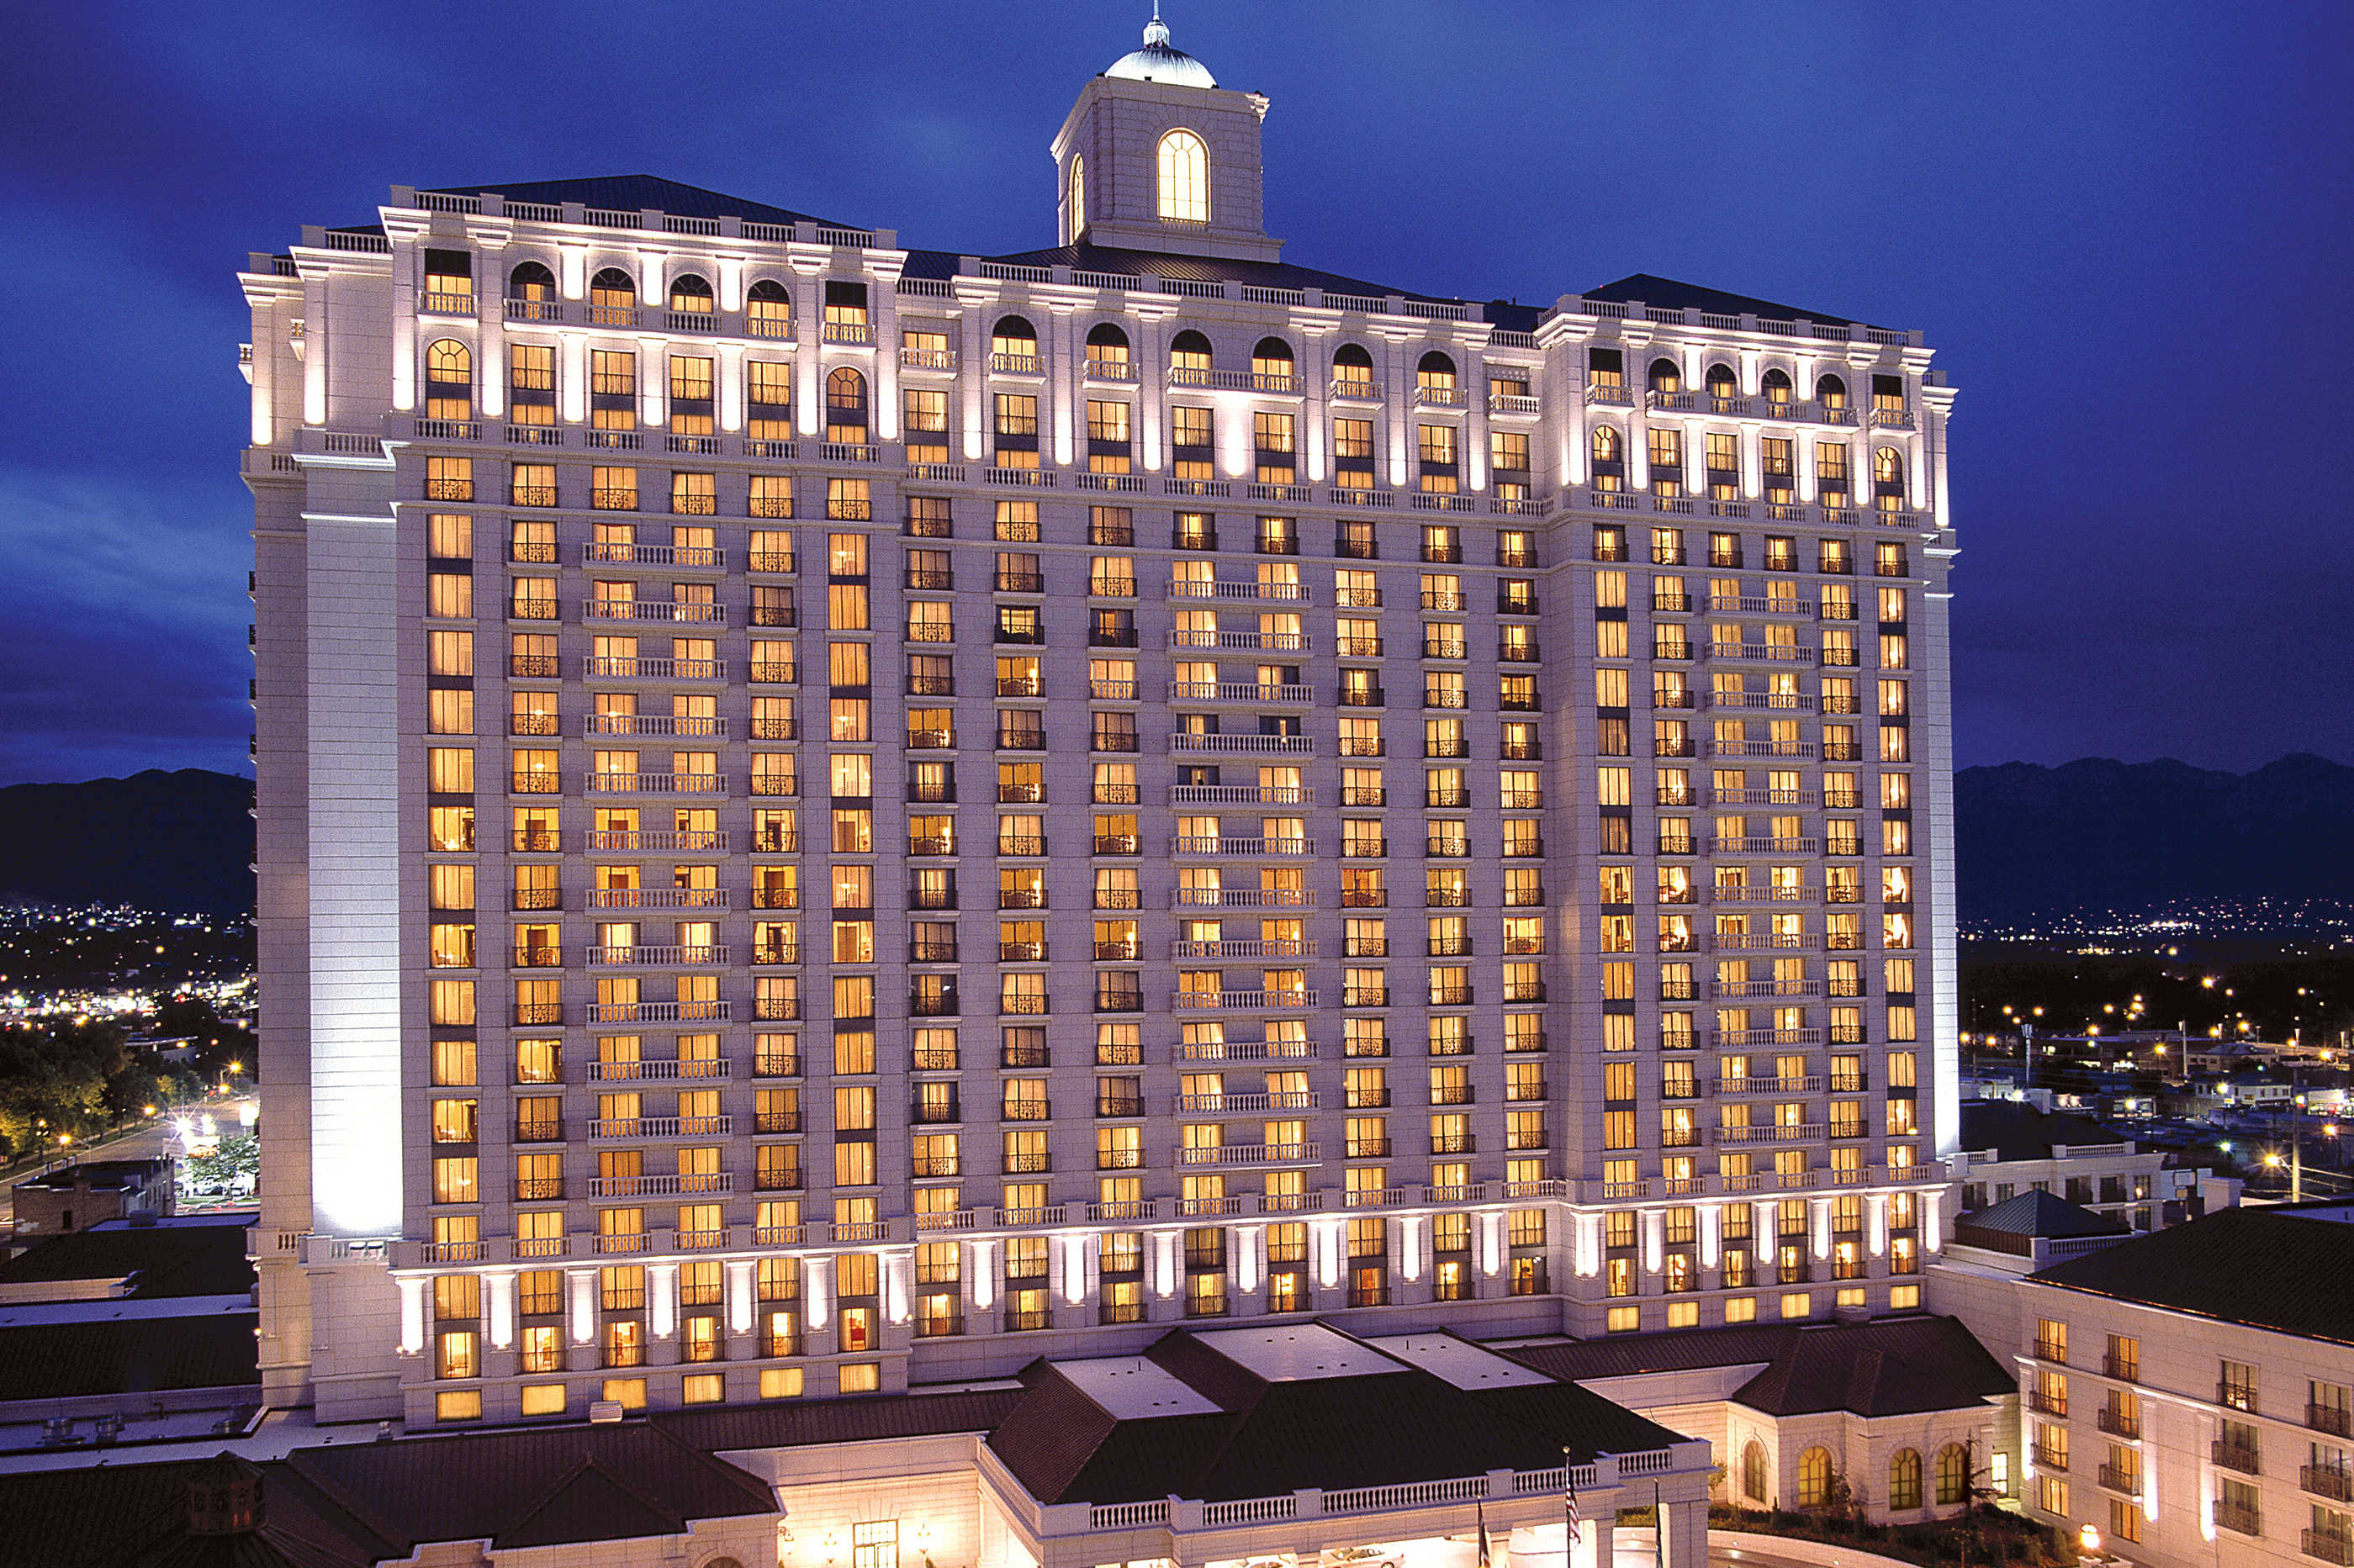 Best Hotels In America Four Seasons Denver, Boston Harbor Hotel